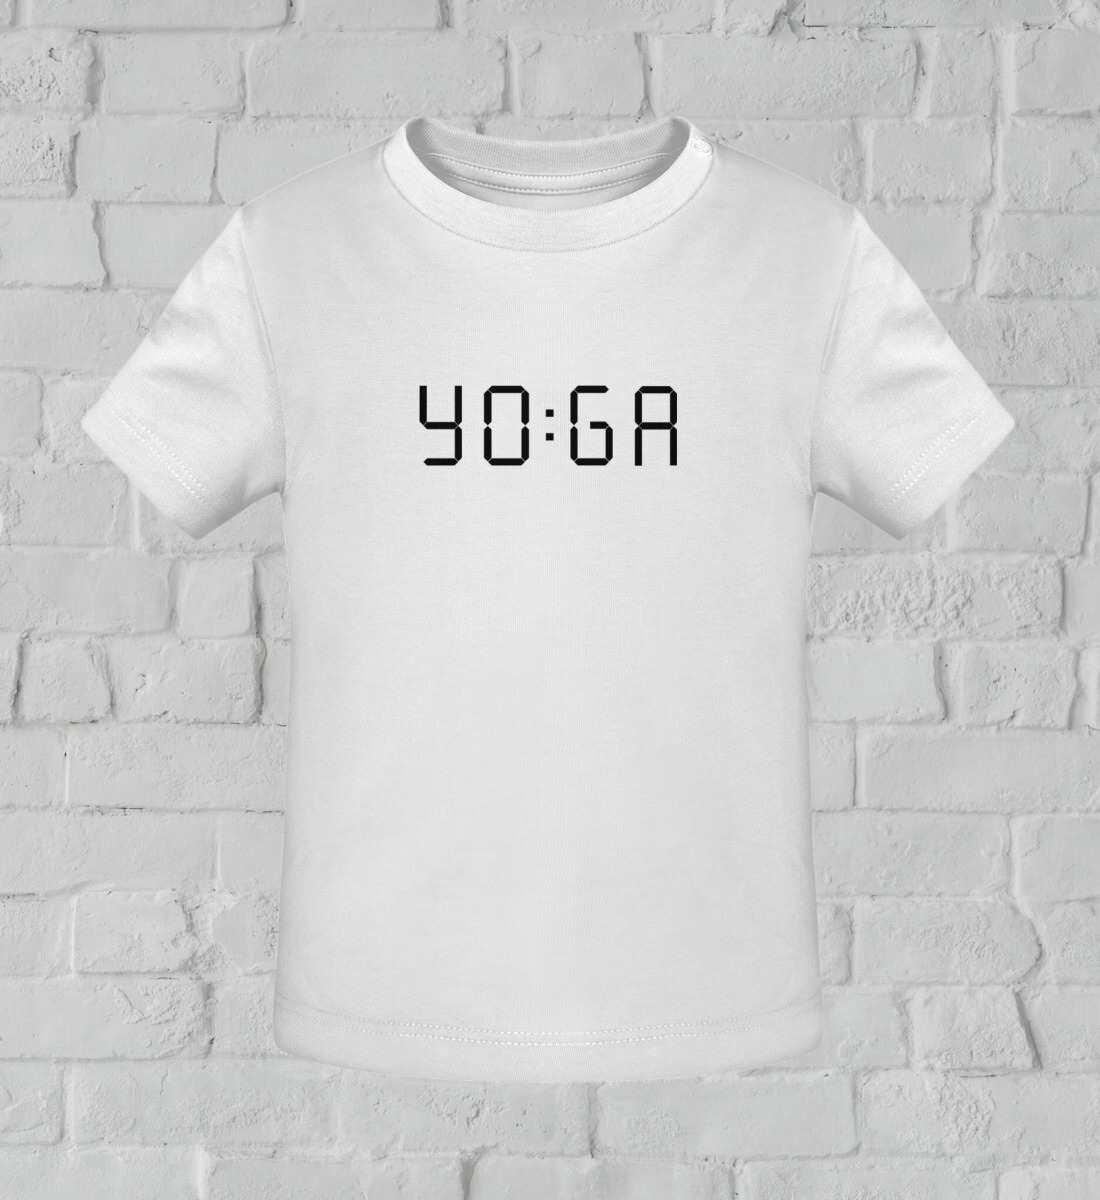 zeit für yoga l yoga shirt kinder weiß l yoga kleidung kinder l nachhaltige mode für kinder l vegane kinder mode